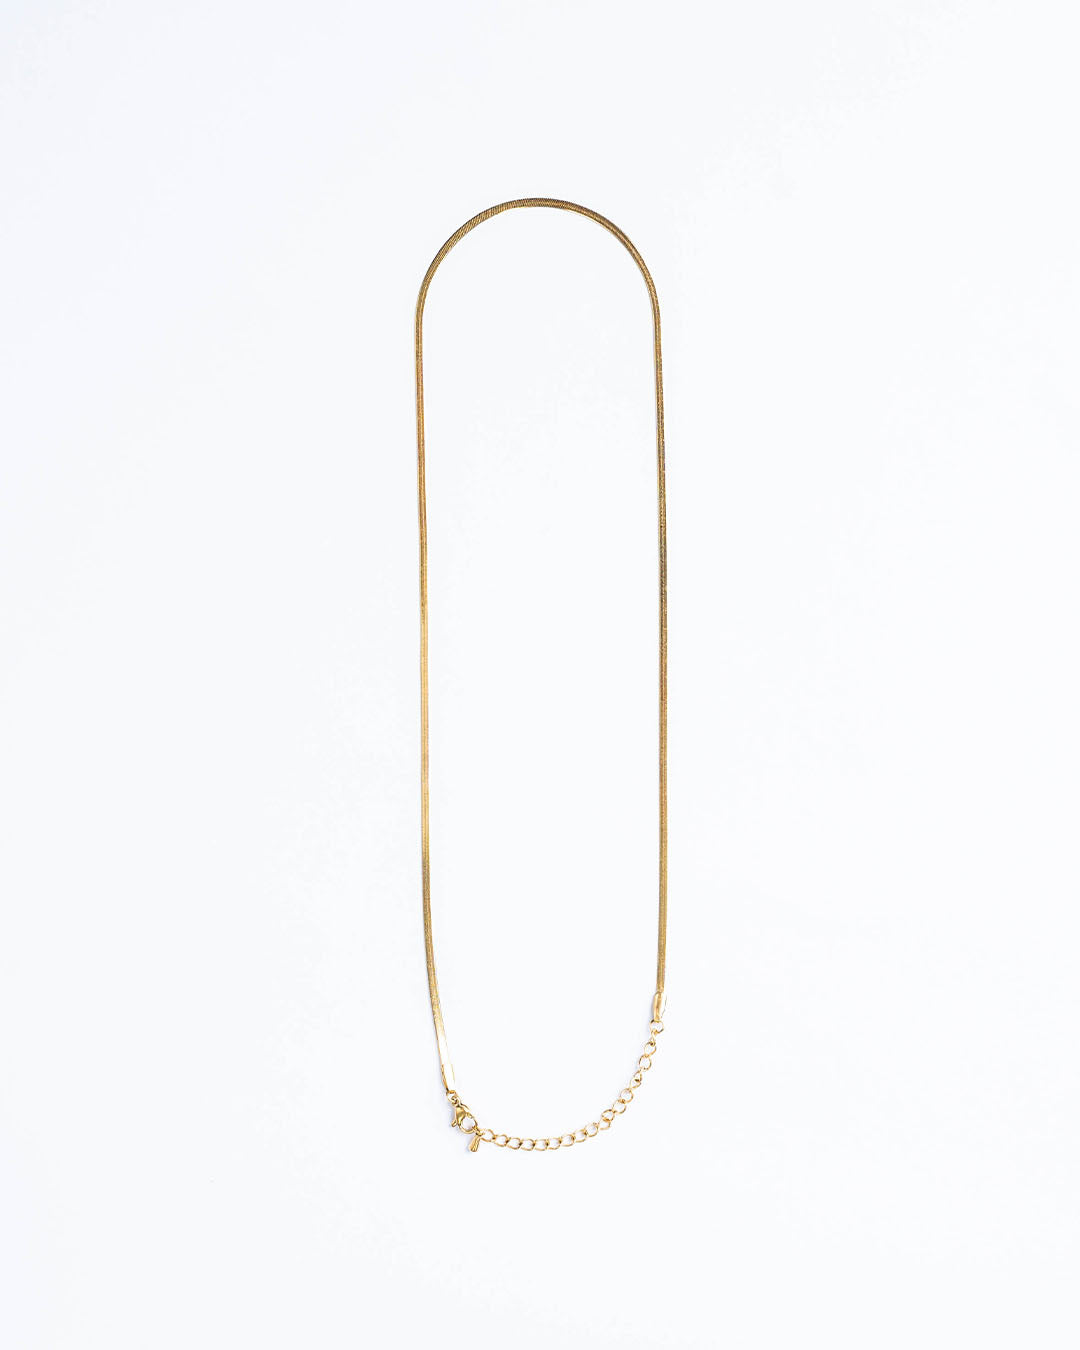 Herringbone Chain Necklace • Stainless Steel